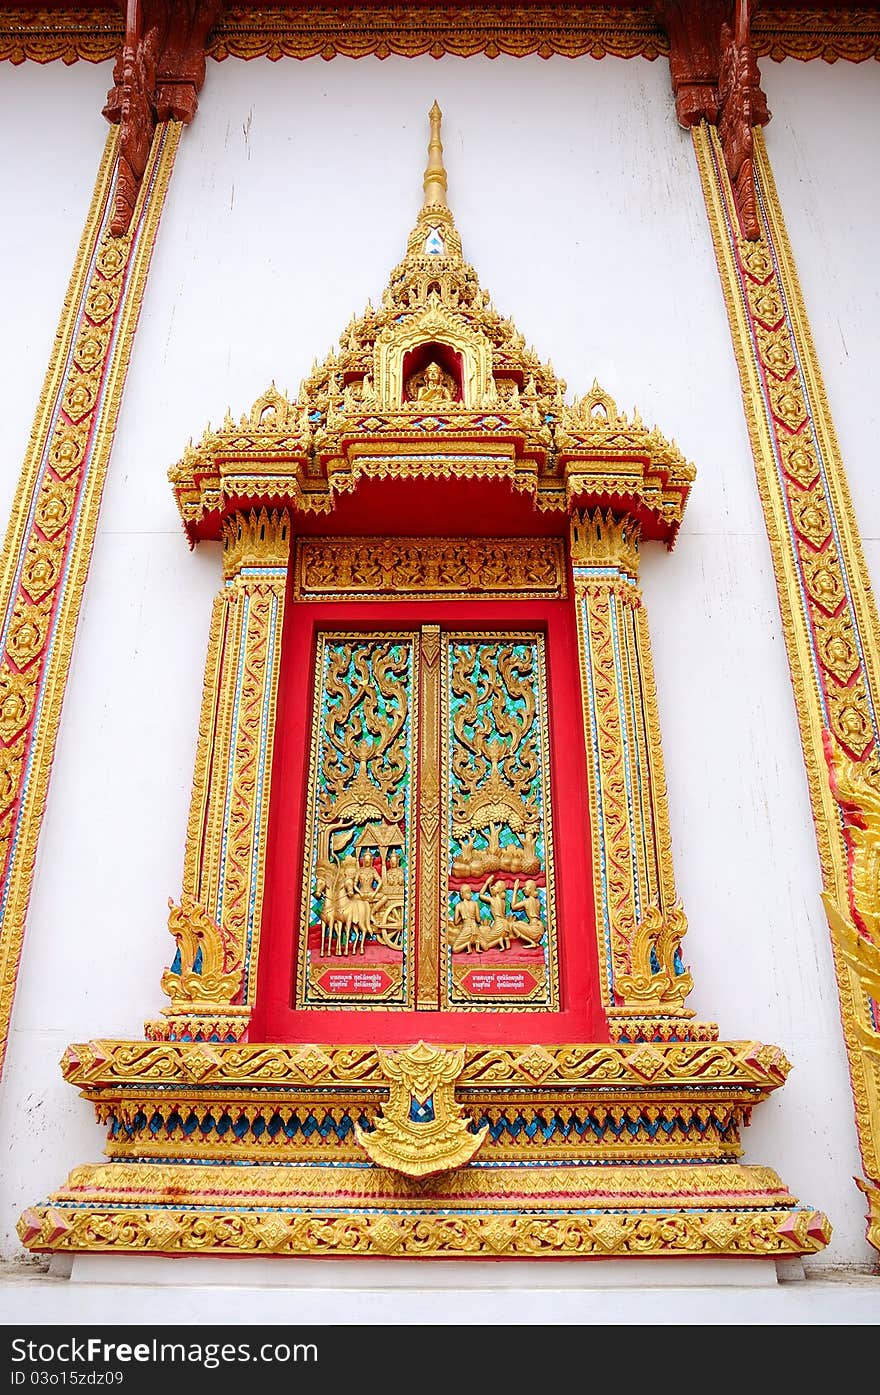 Window monastery in thai style. Window monastery in thai style